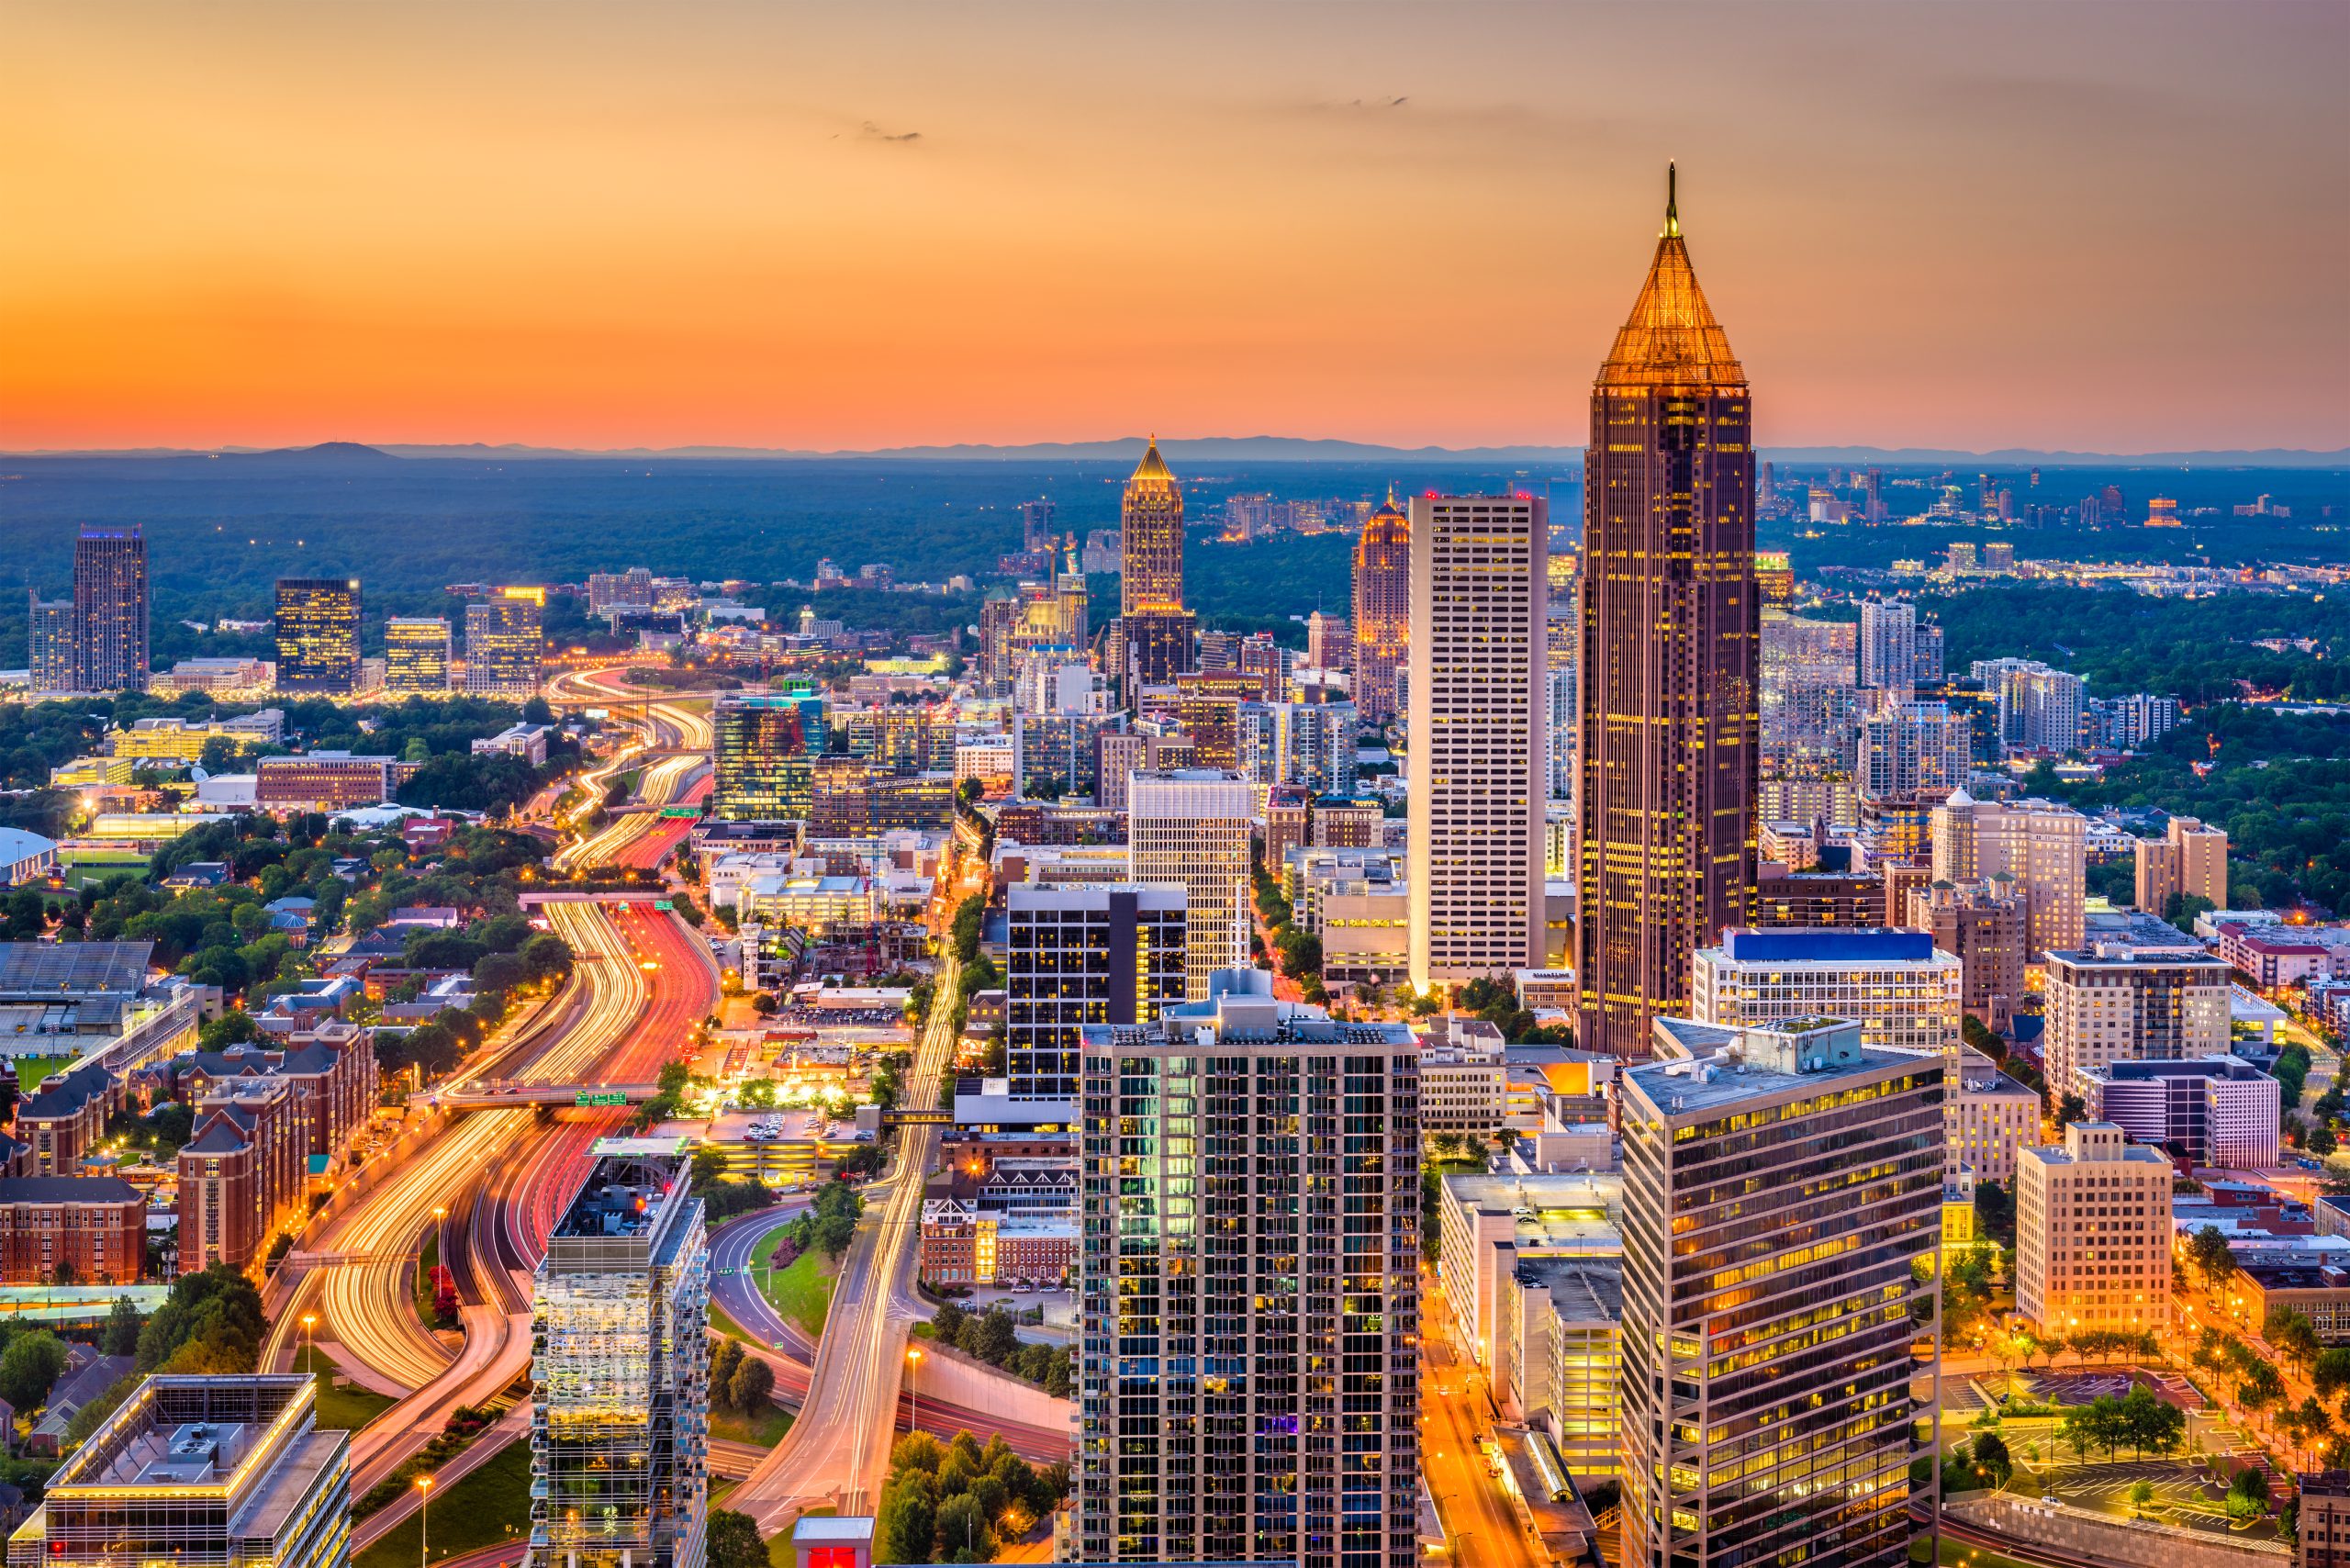 Moving Services in Atlanta